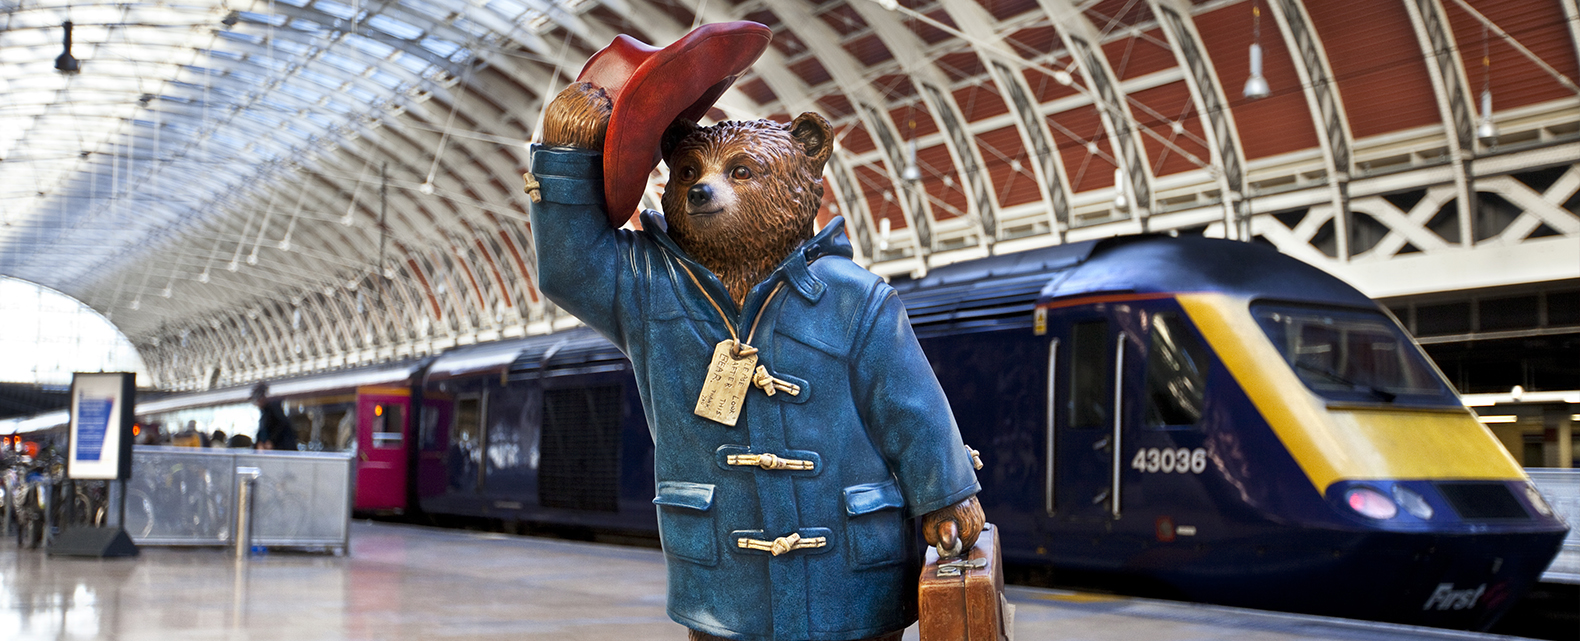 Paddington station with the statue of Paddington Bear and trans